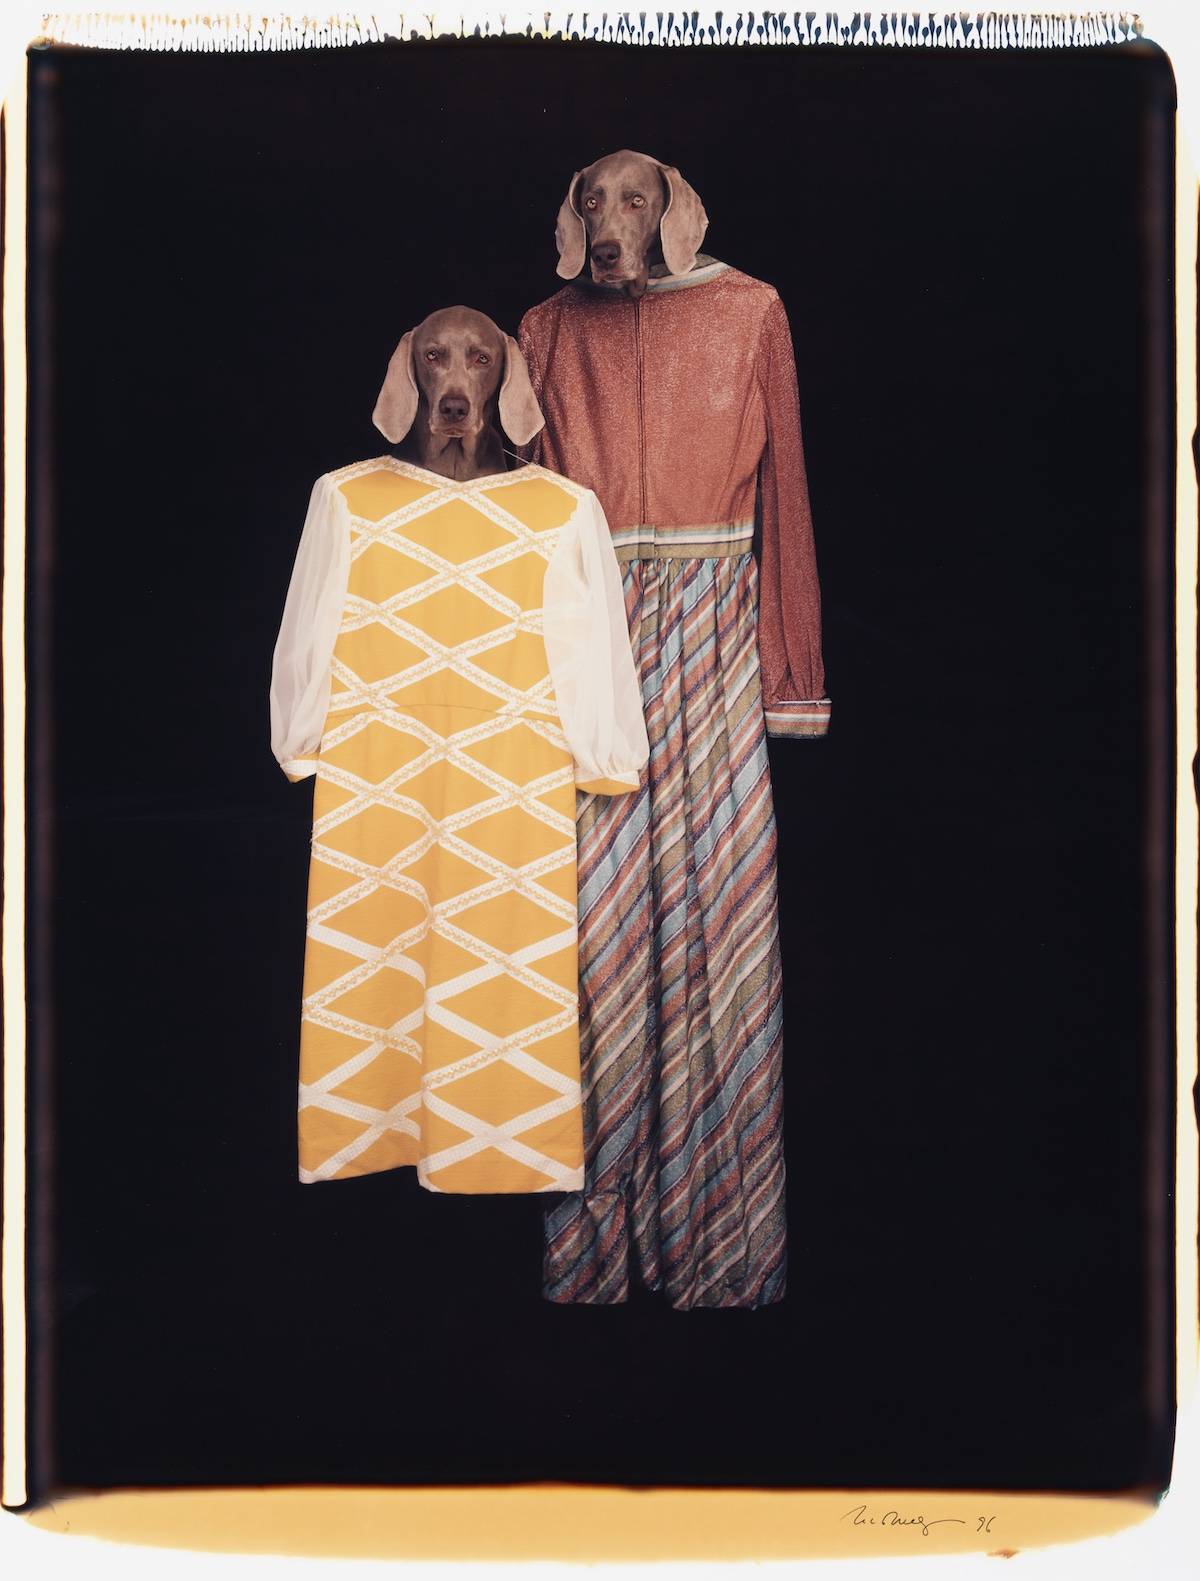 William Wegman Dress Holders, 1996 color Polaroid 24 x 20 inches (61 x 51 cm) 35 x 26 1/2 inches (89 x 67 cm) frame, Sperone Westwater, New York